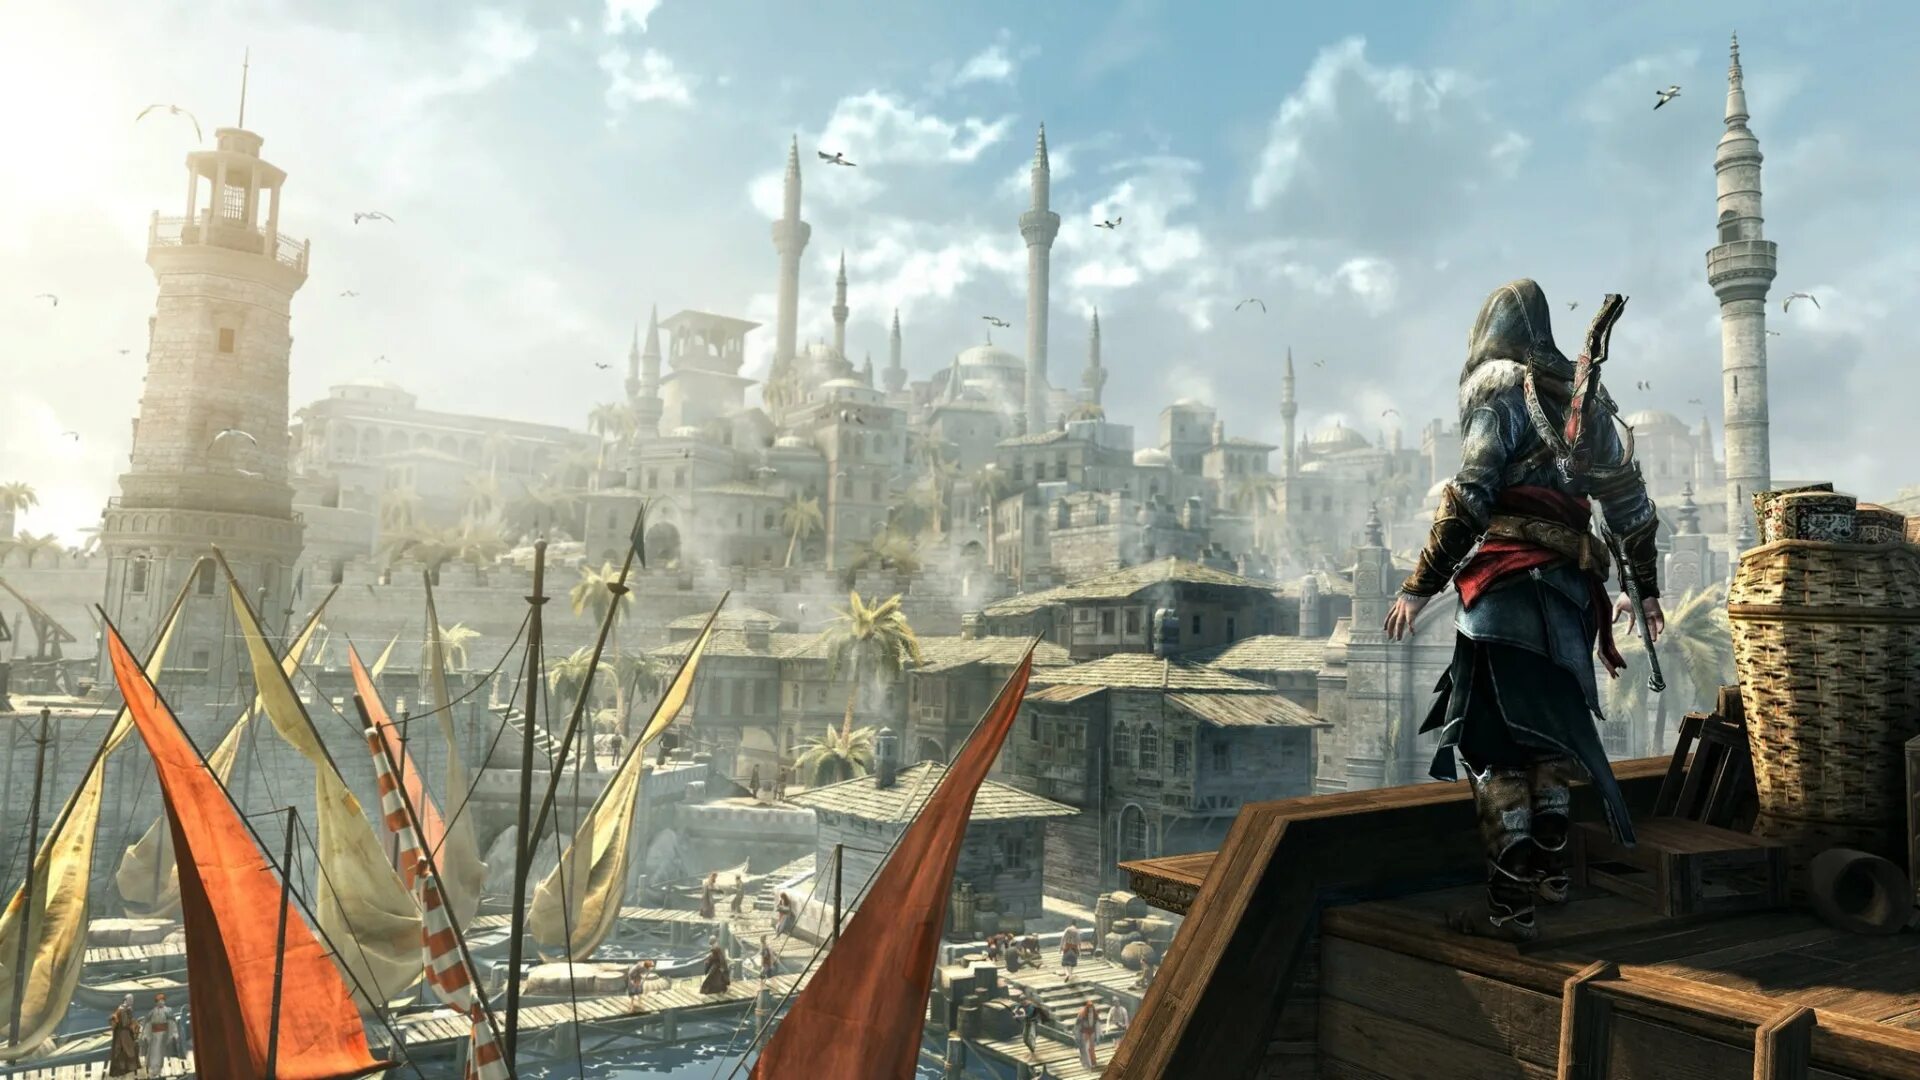 Assassin"s Creed: Revelations. Assassin's Creed Revelations Стамбул. Ассасин Крид 5. Константинополь ассасин Крид. Лучшие игры ассасин крид